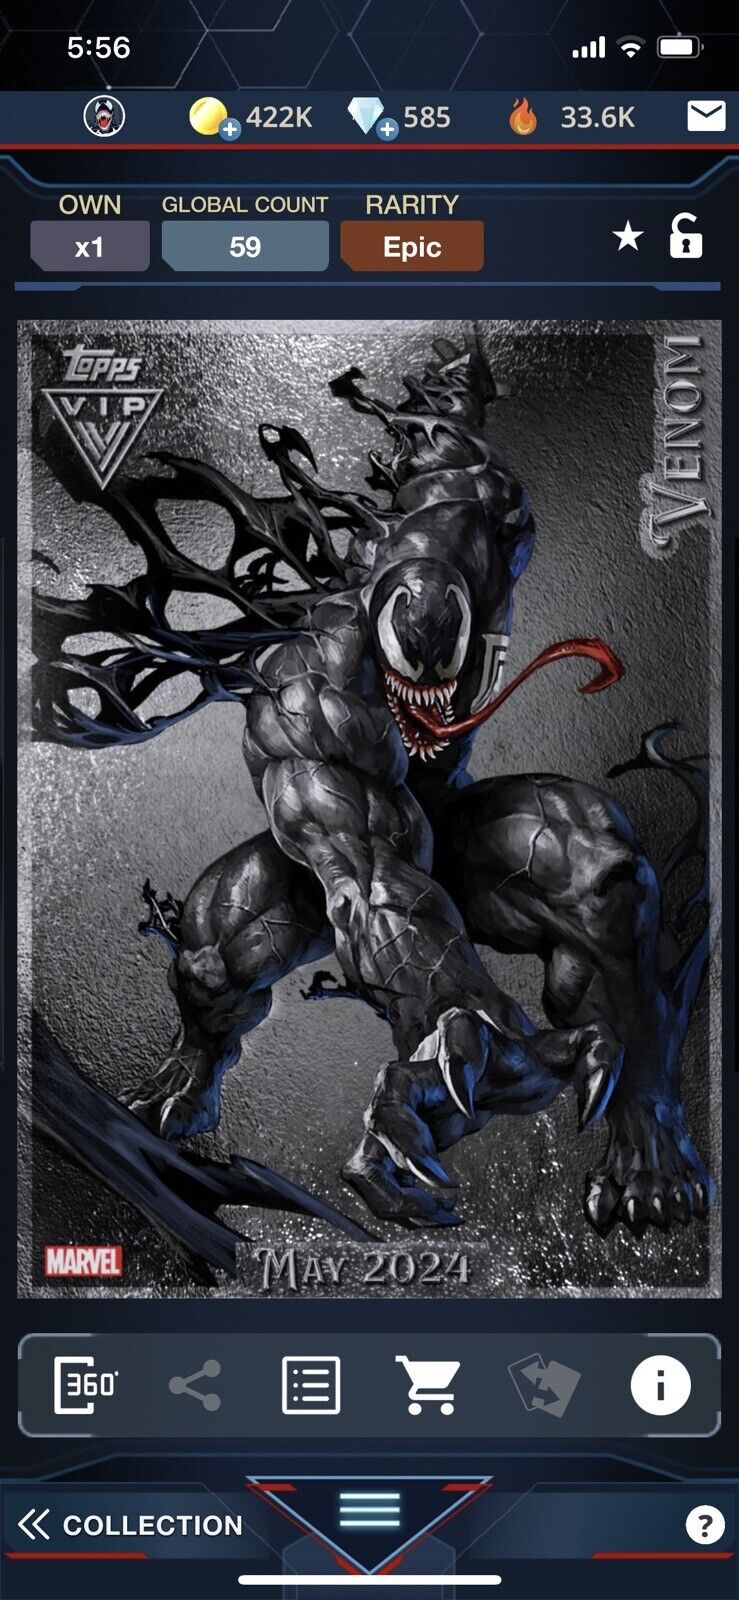 Topps Marvel Collect Epic Venom VIP May 2024 - Digital